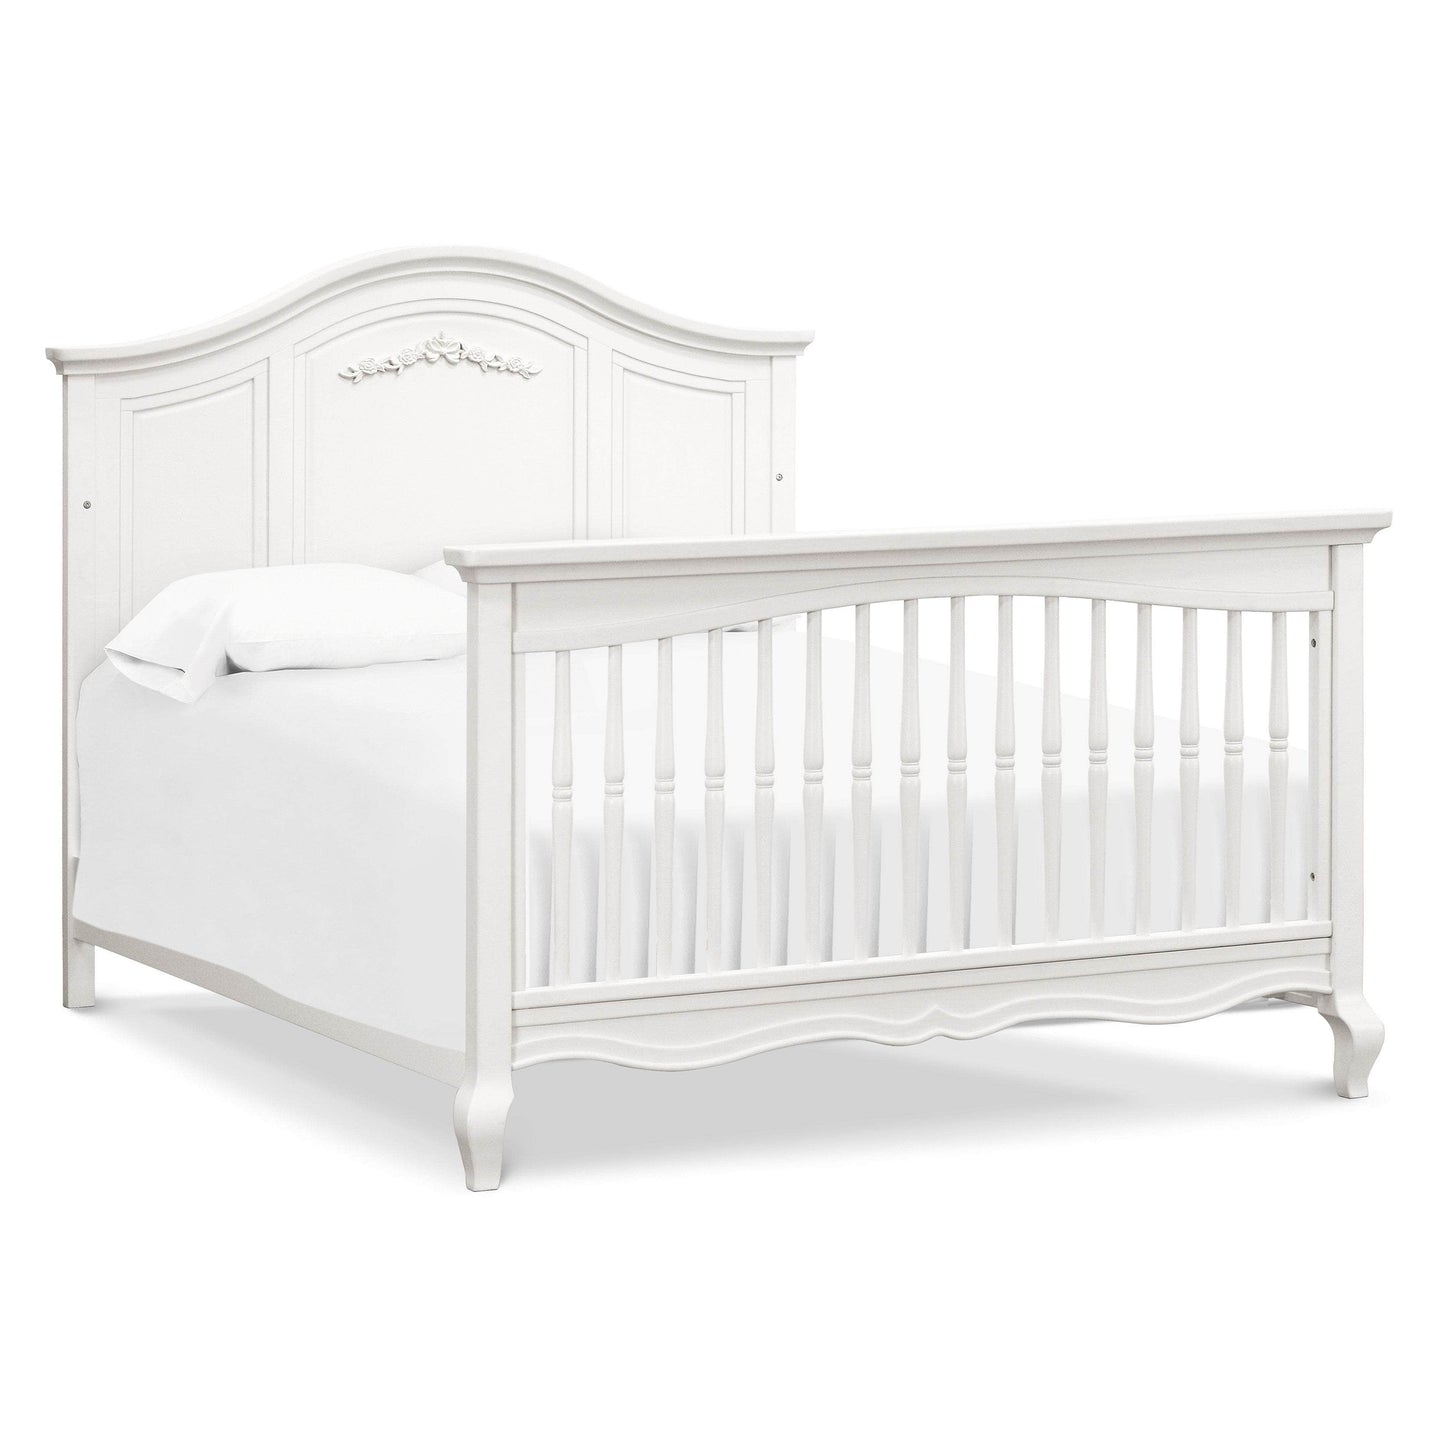 B19601RW,Mirabelle 4-in-1 Convertible Crib in Warm White